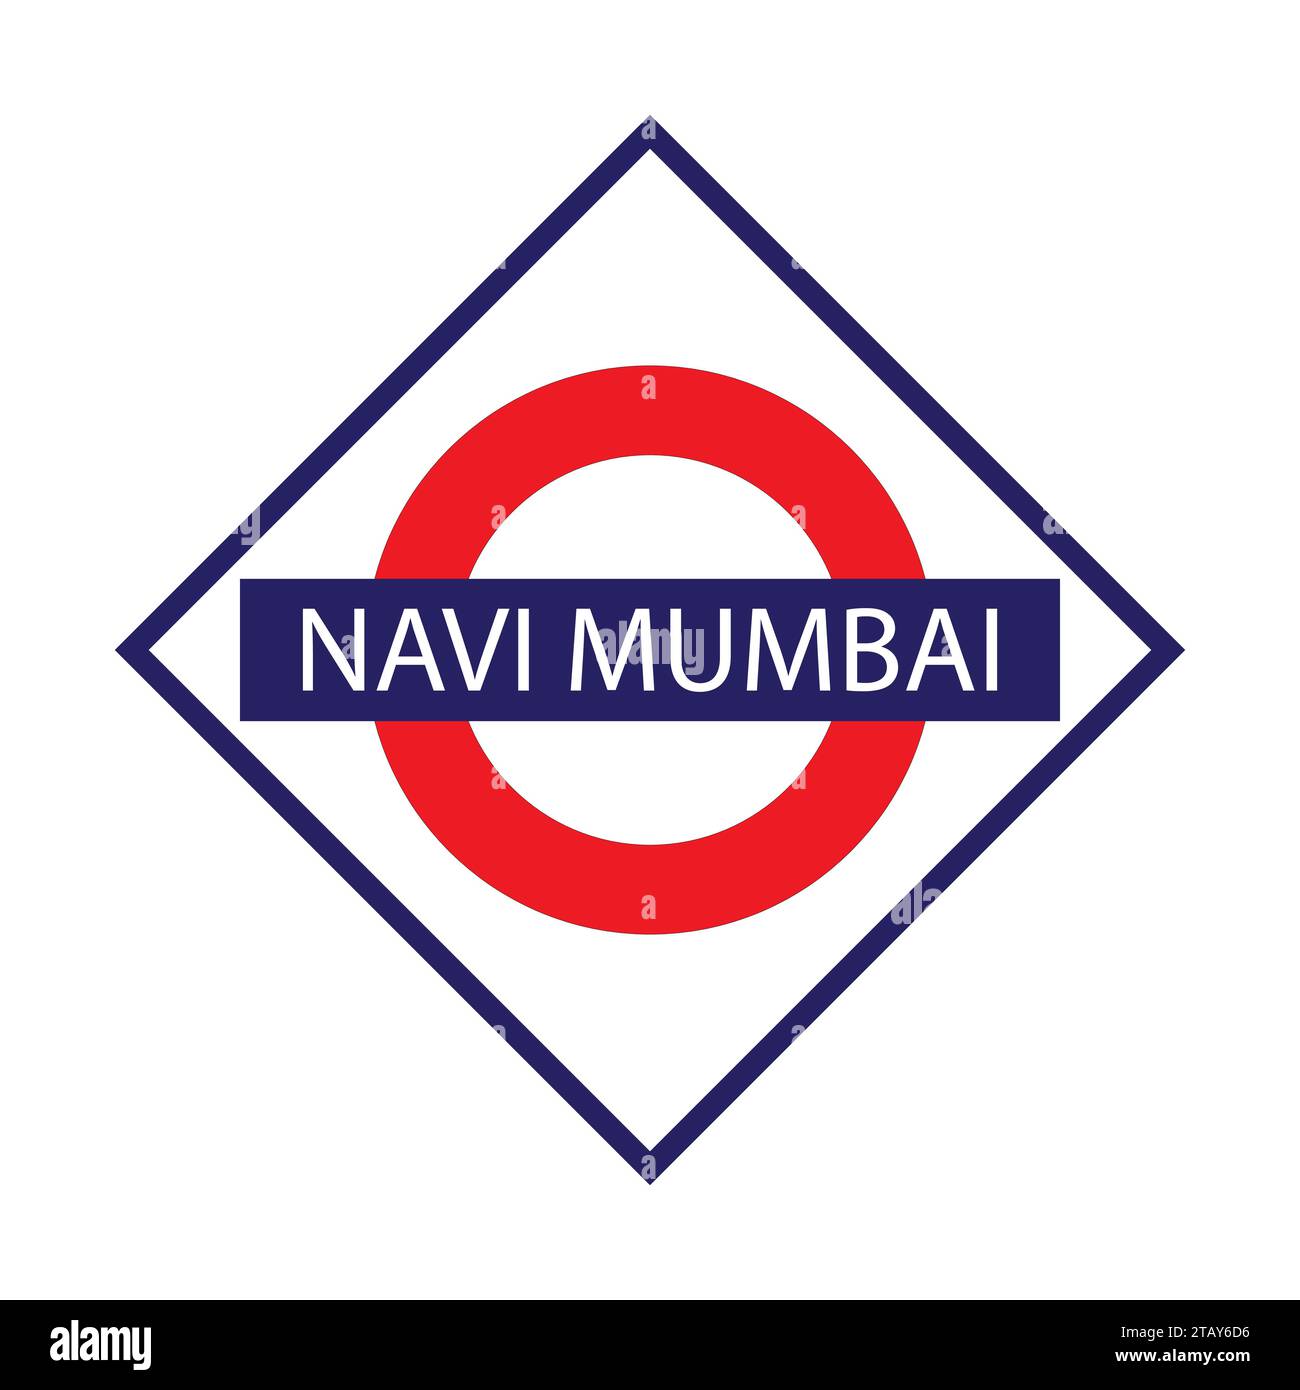 Navi Mumbai Railways Namensschild isoliert auf weiß Stock Vektor